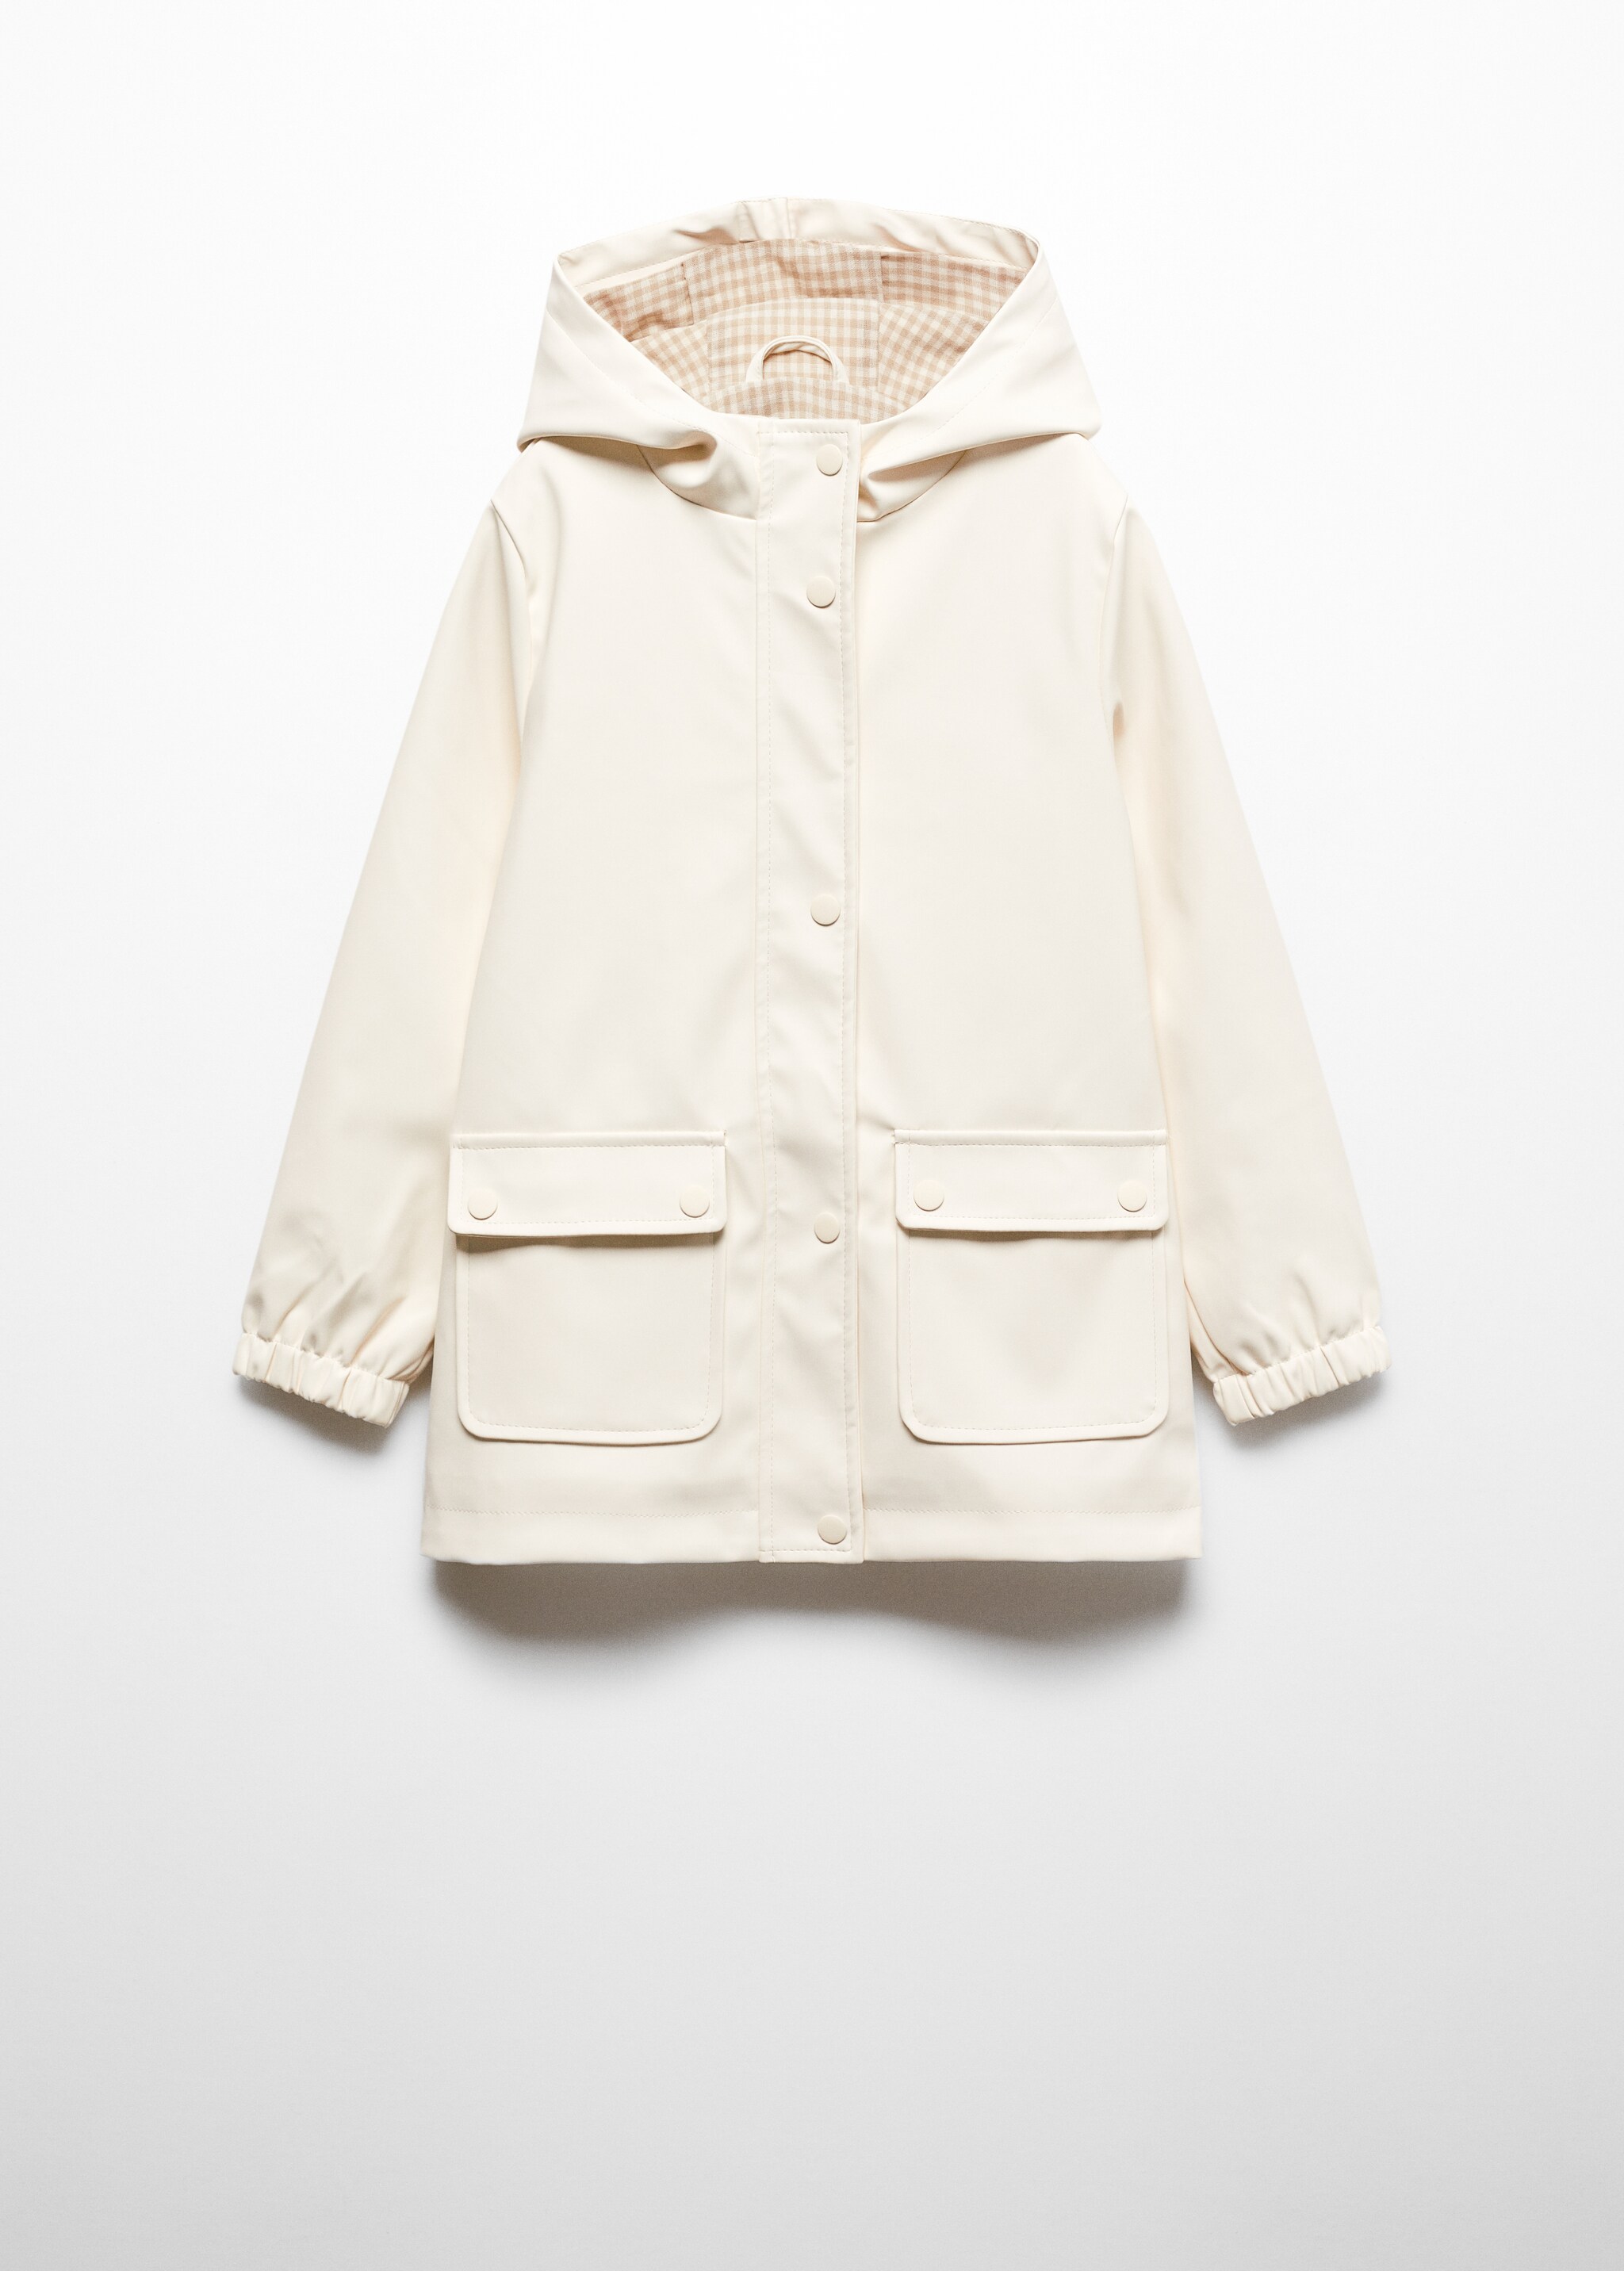 Raincoat hooded jacket - Article without model